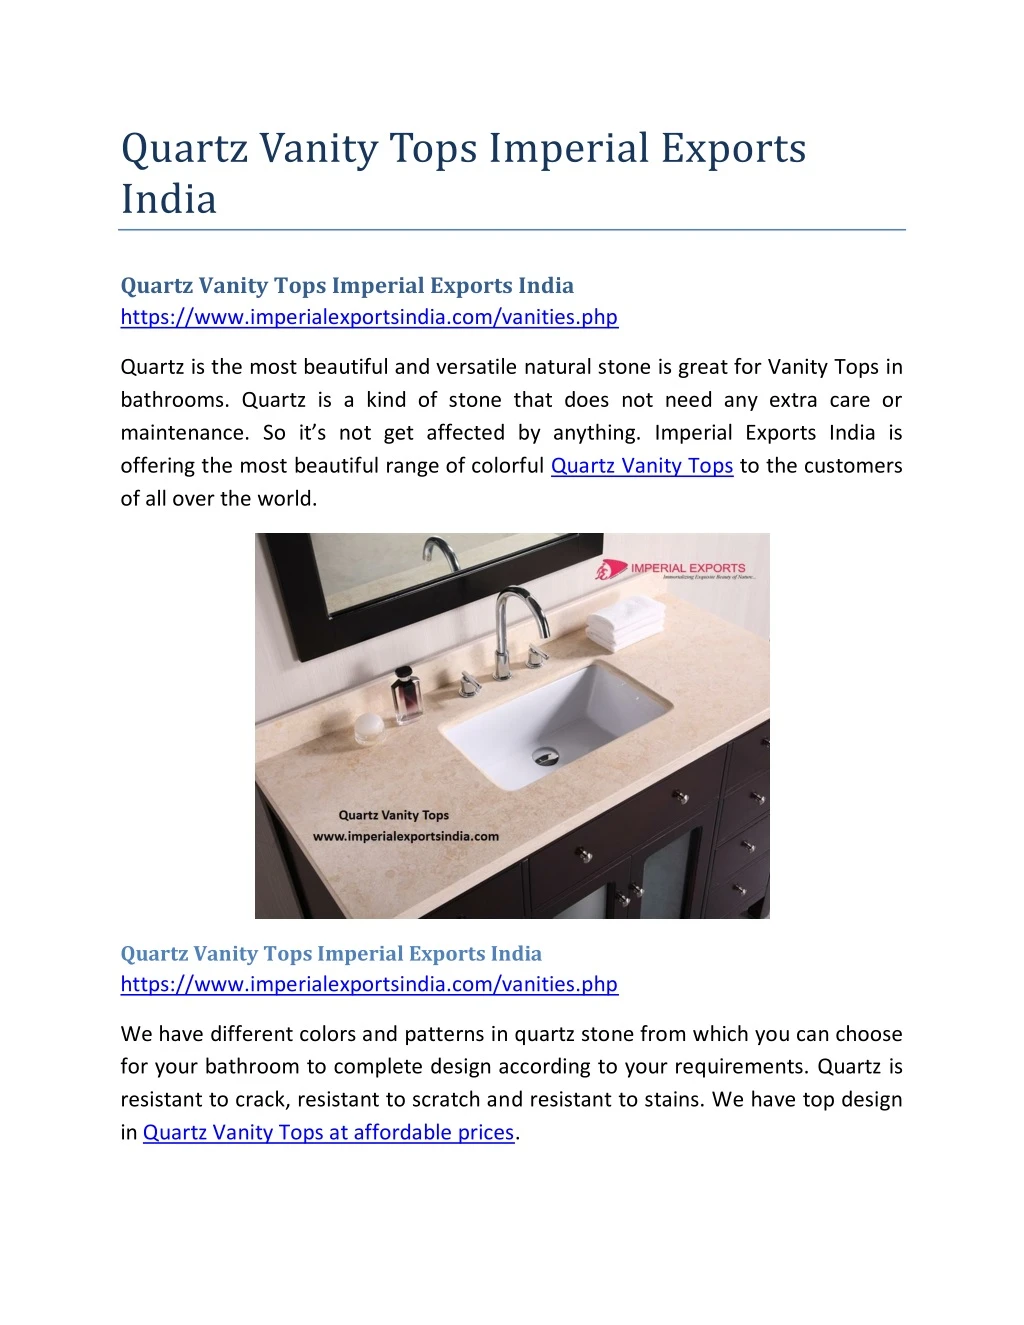 quartz vanity tops imperial exports india